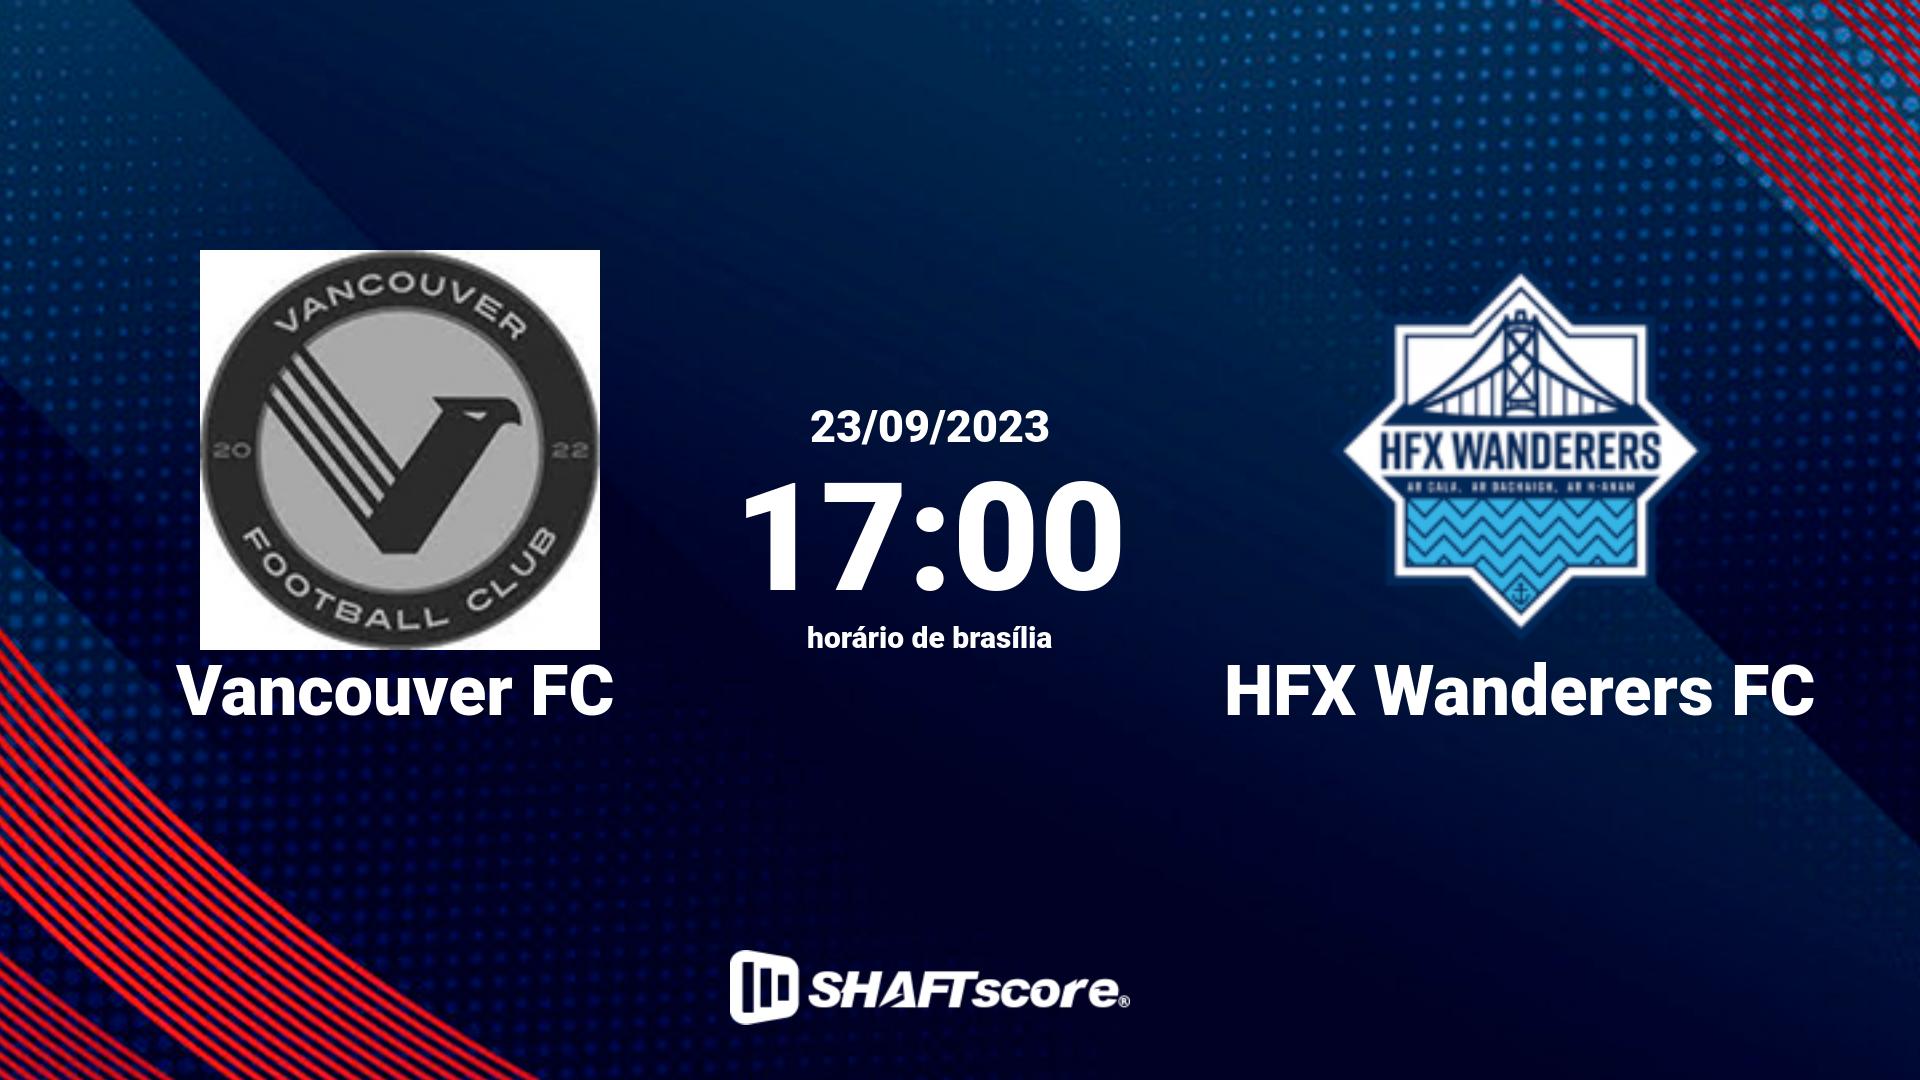 Estatísticas do jogo Vancouver FC vs HFX Wanderers FC 23.09 17:00